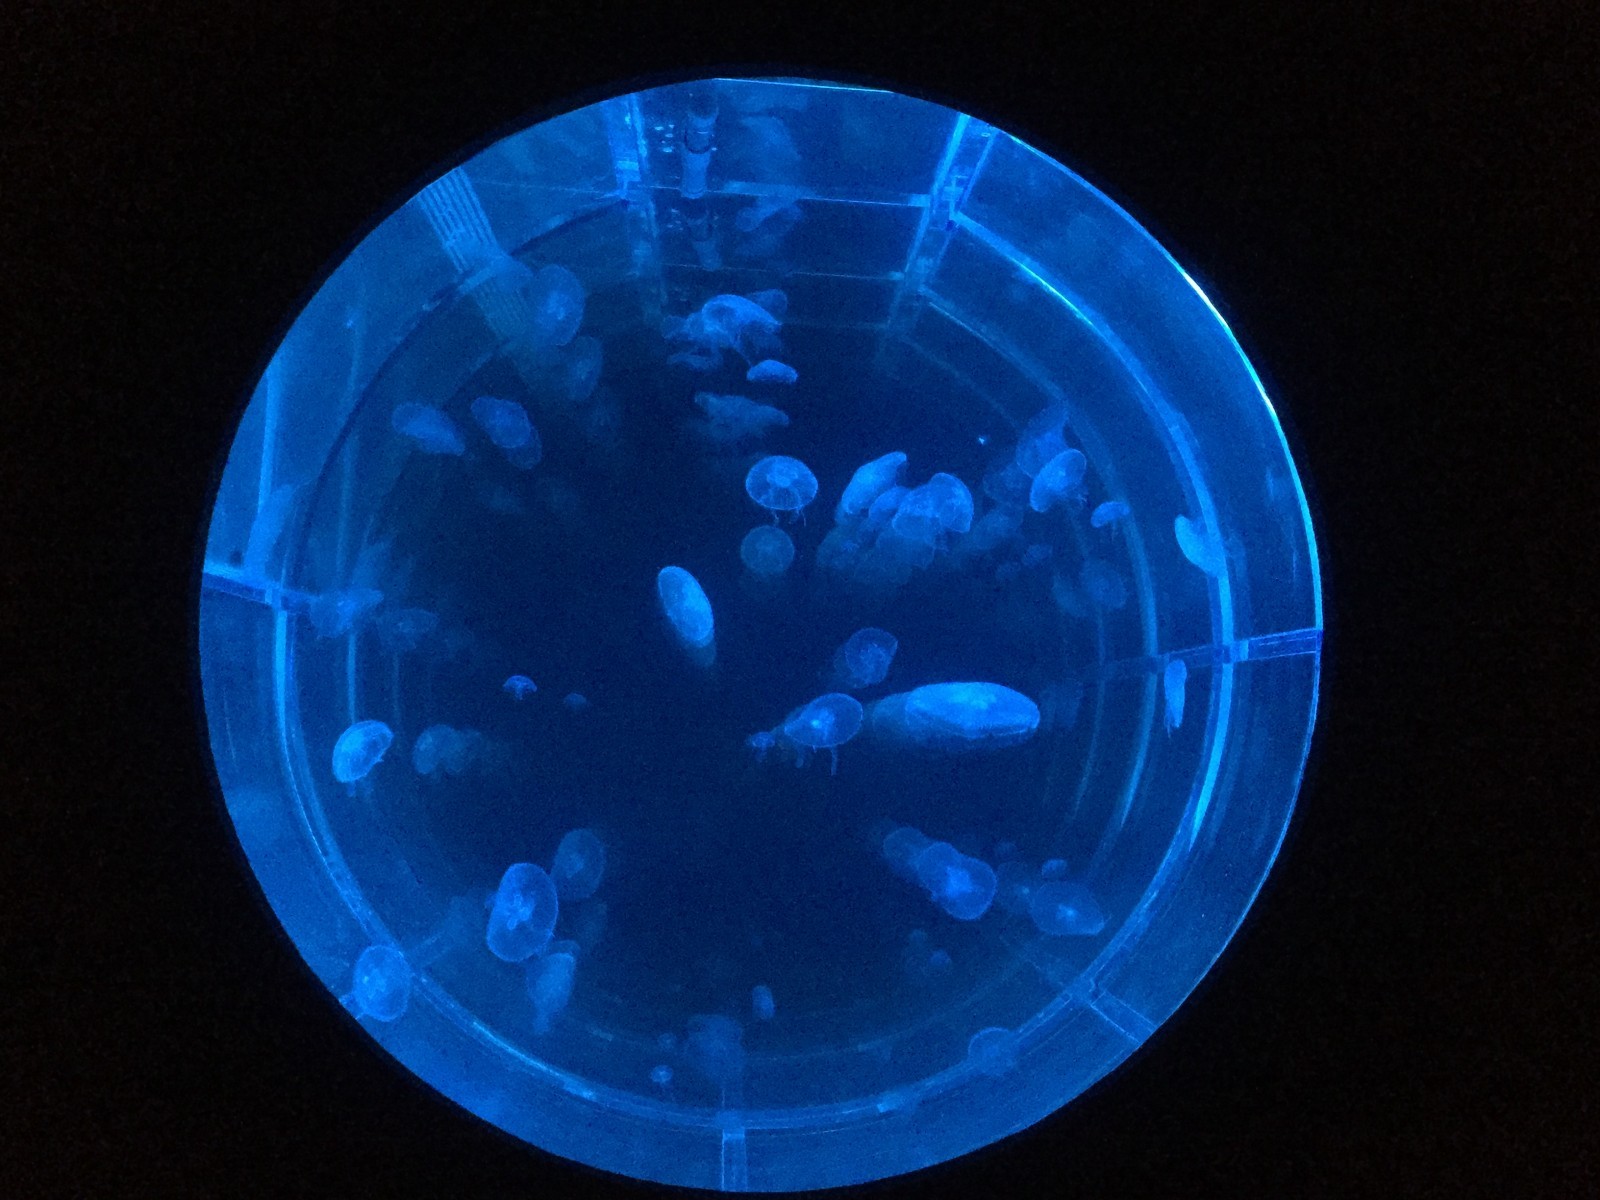 Rimini Protokoll. Win><win. 2017 Aquarium with live jellyfishes Photo of multimedia installation in the museum "Garage". Photo: © Art Magazine